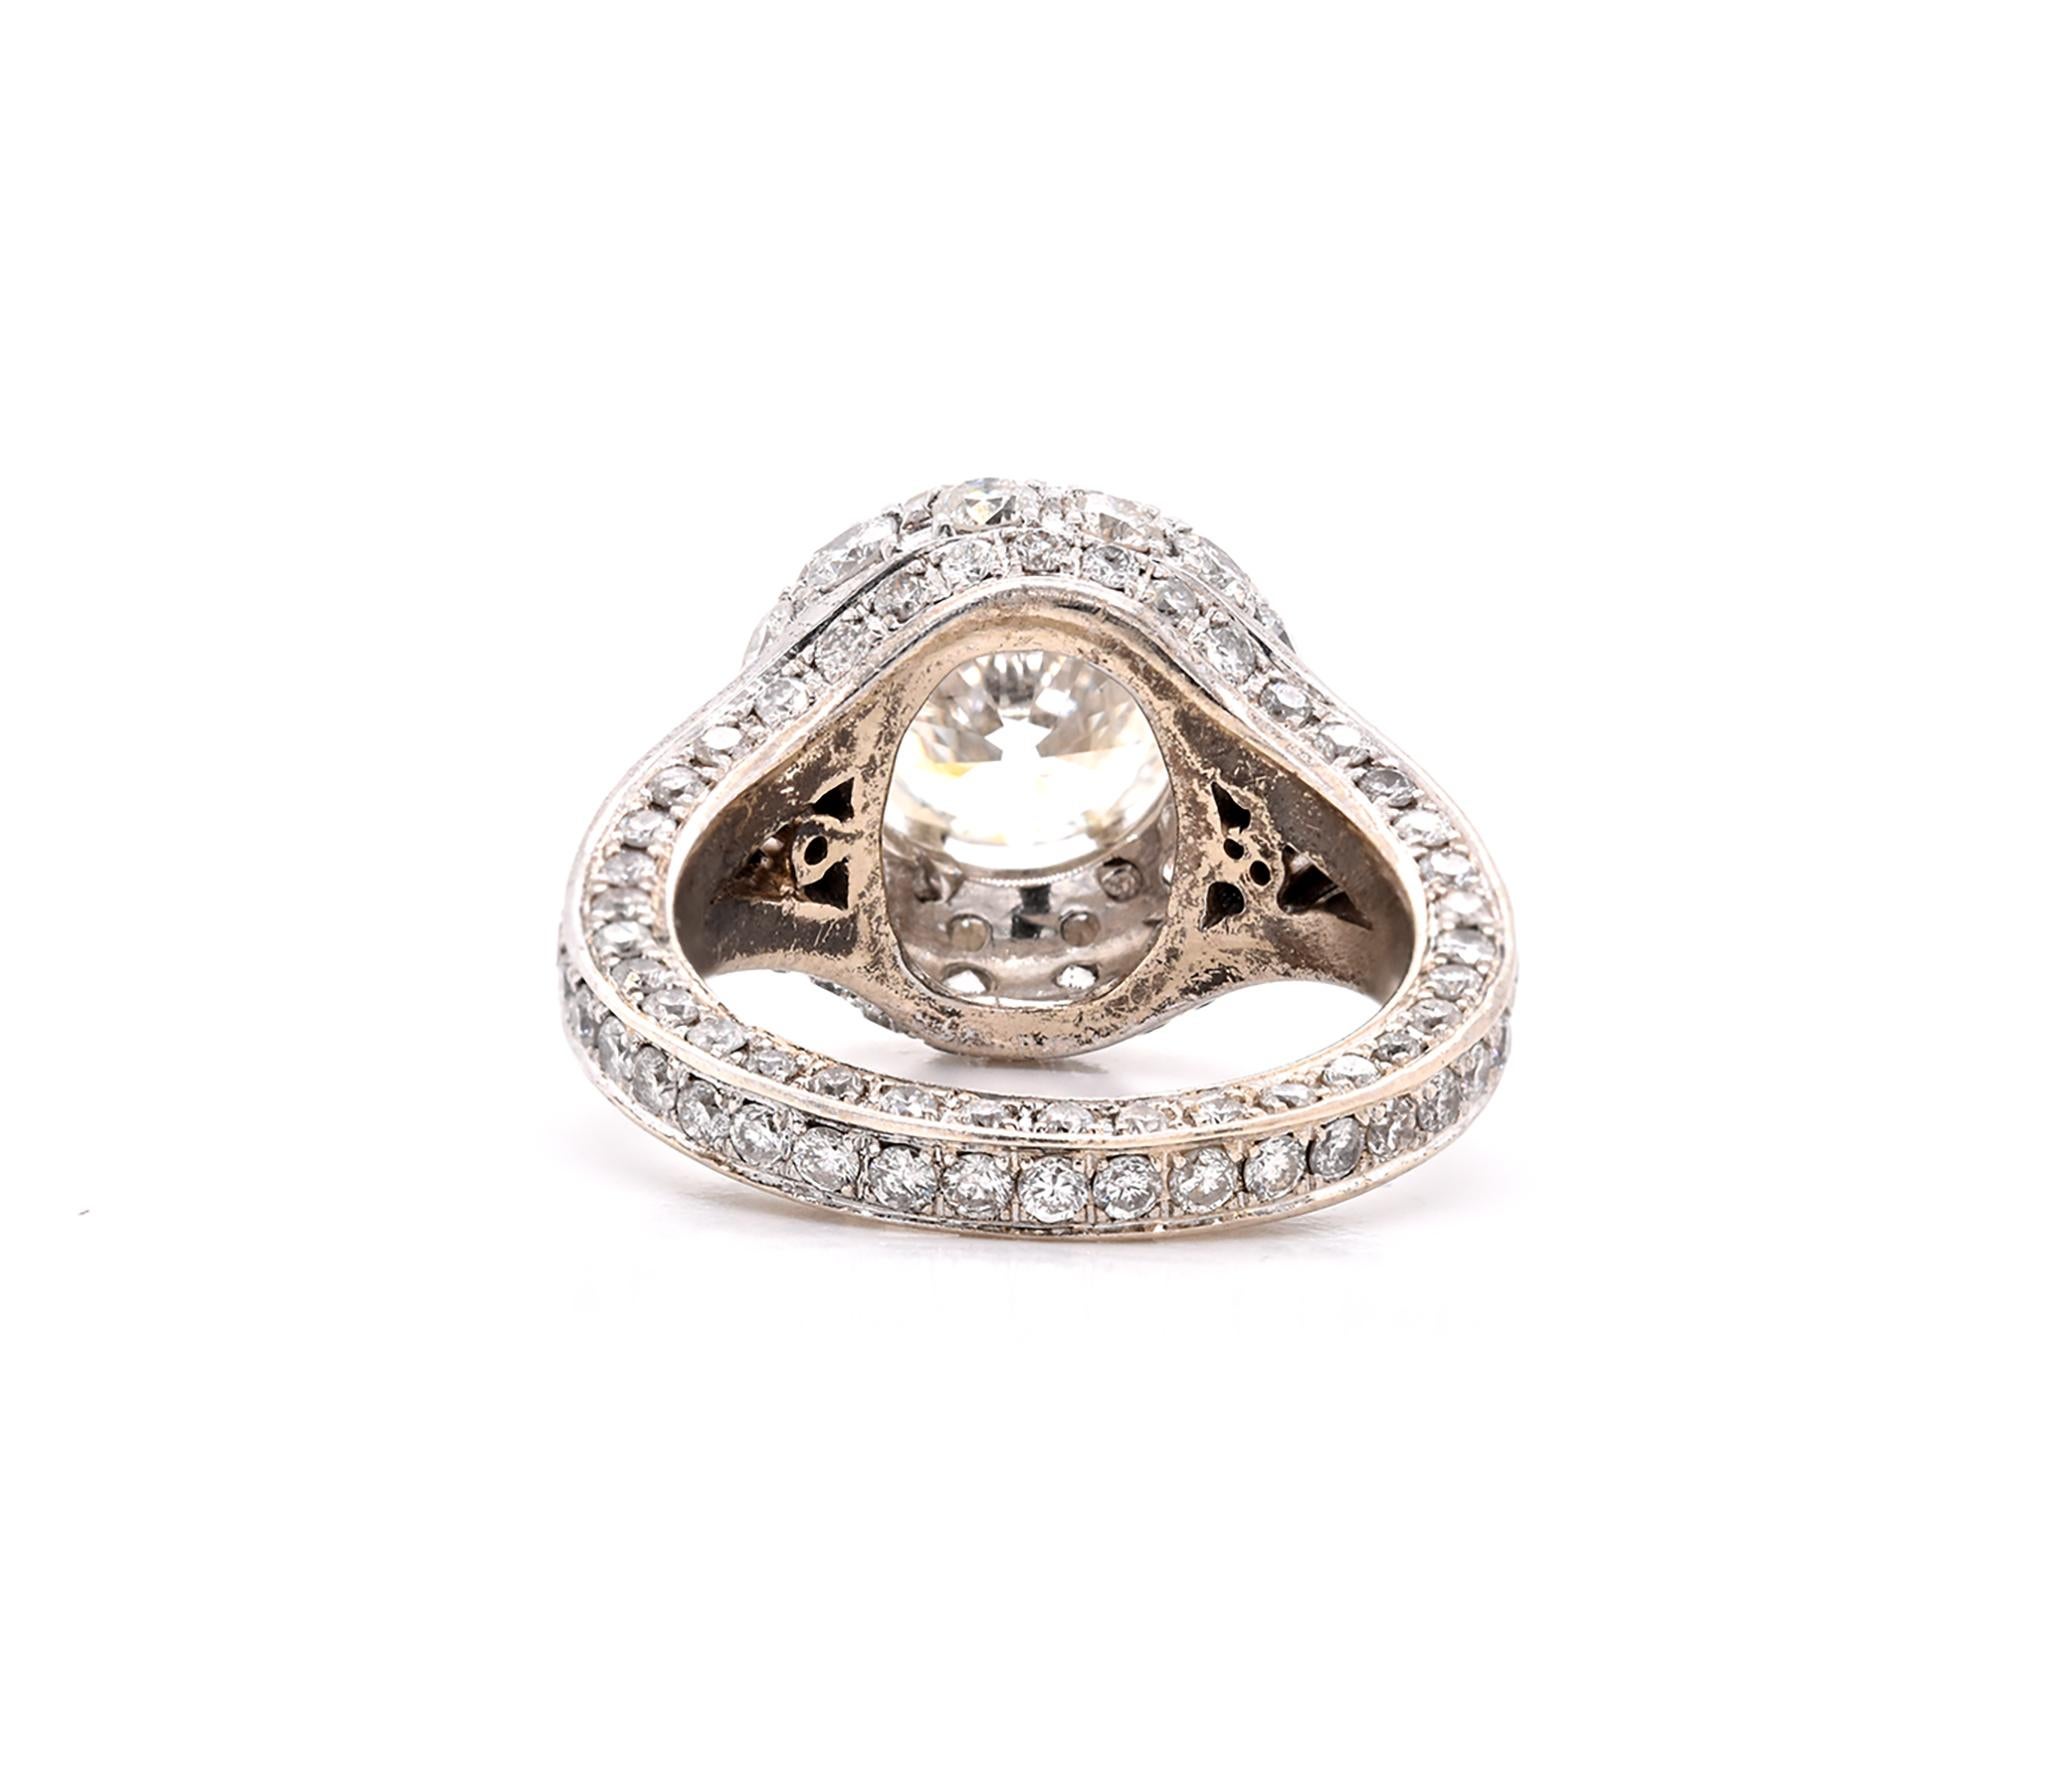 Round Cut 14 Karat White Gold Diamond Engagement Ring with Pave Diamond Setting